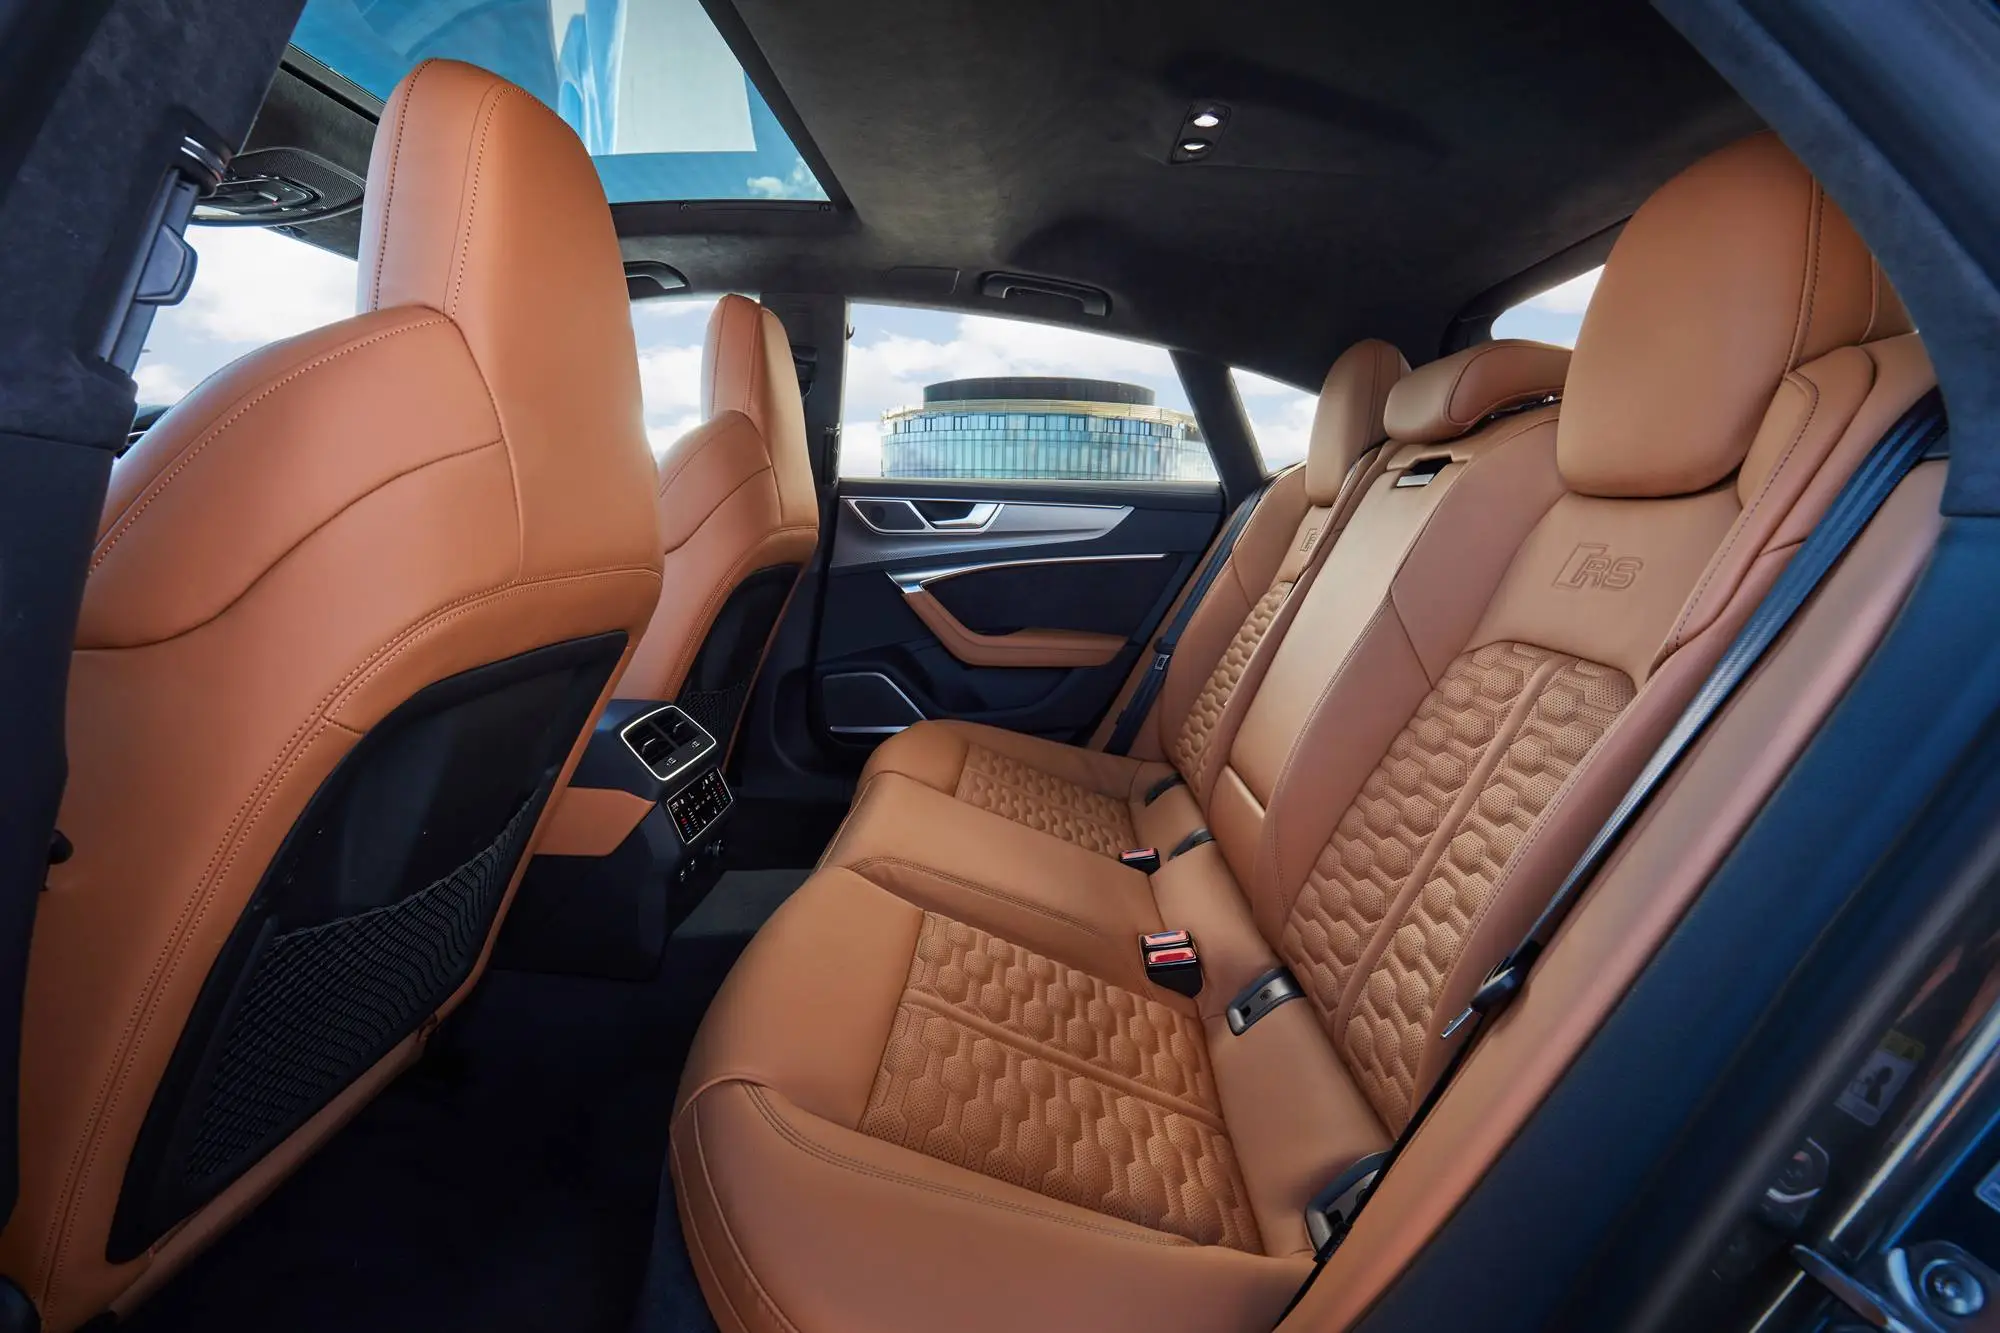 Audi RS7 interior - Seats